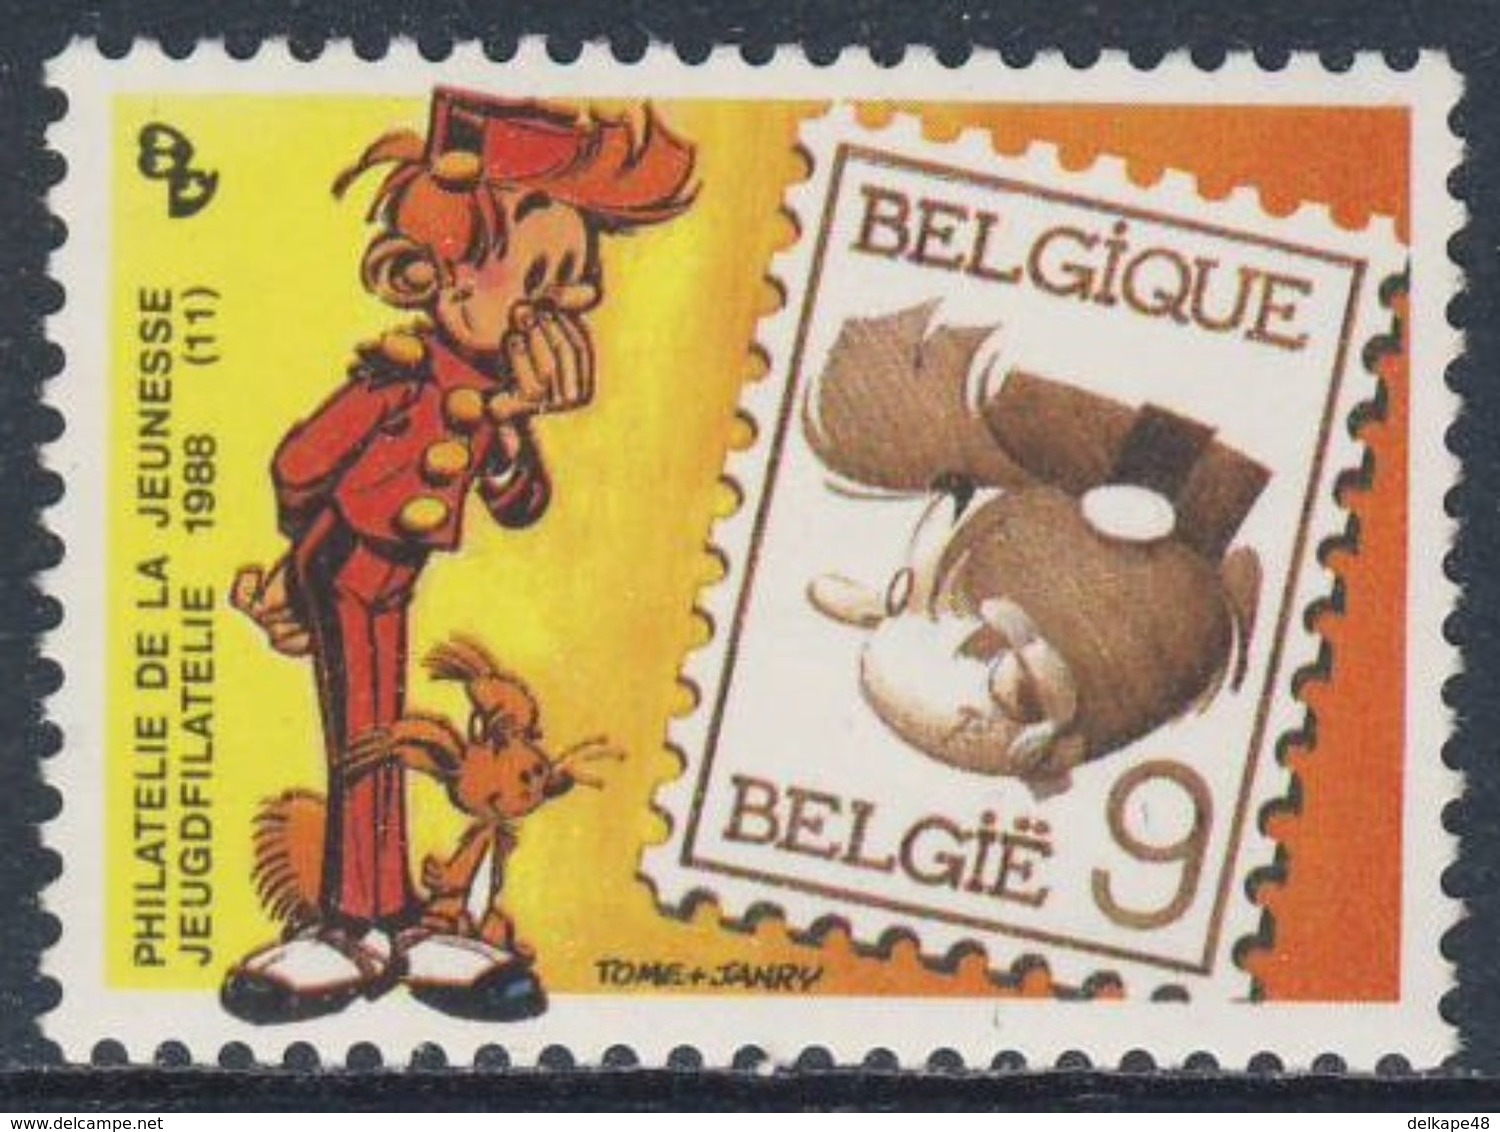 Belgie Belgique Belgium 1988 Mi 2354 YT 2302 ** Spirou / Robbedoes By Robert Velter / Comic Strip / Stripfiguur - Bandes Dessinées